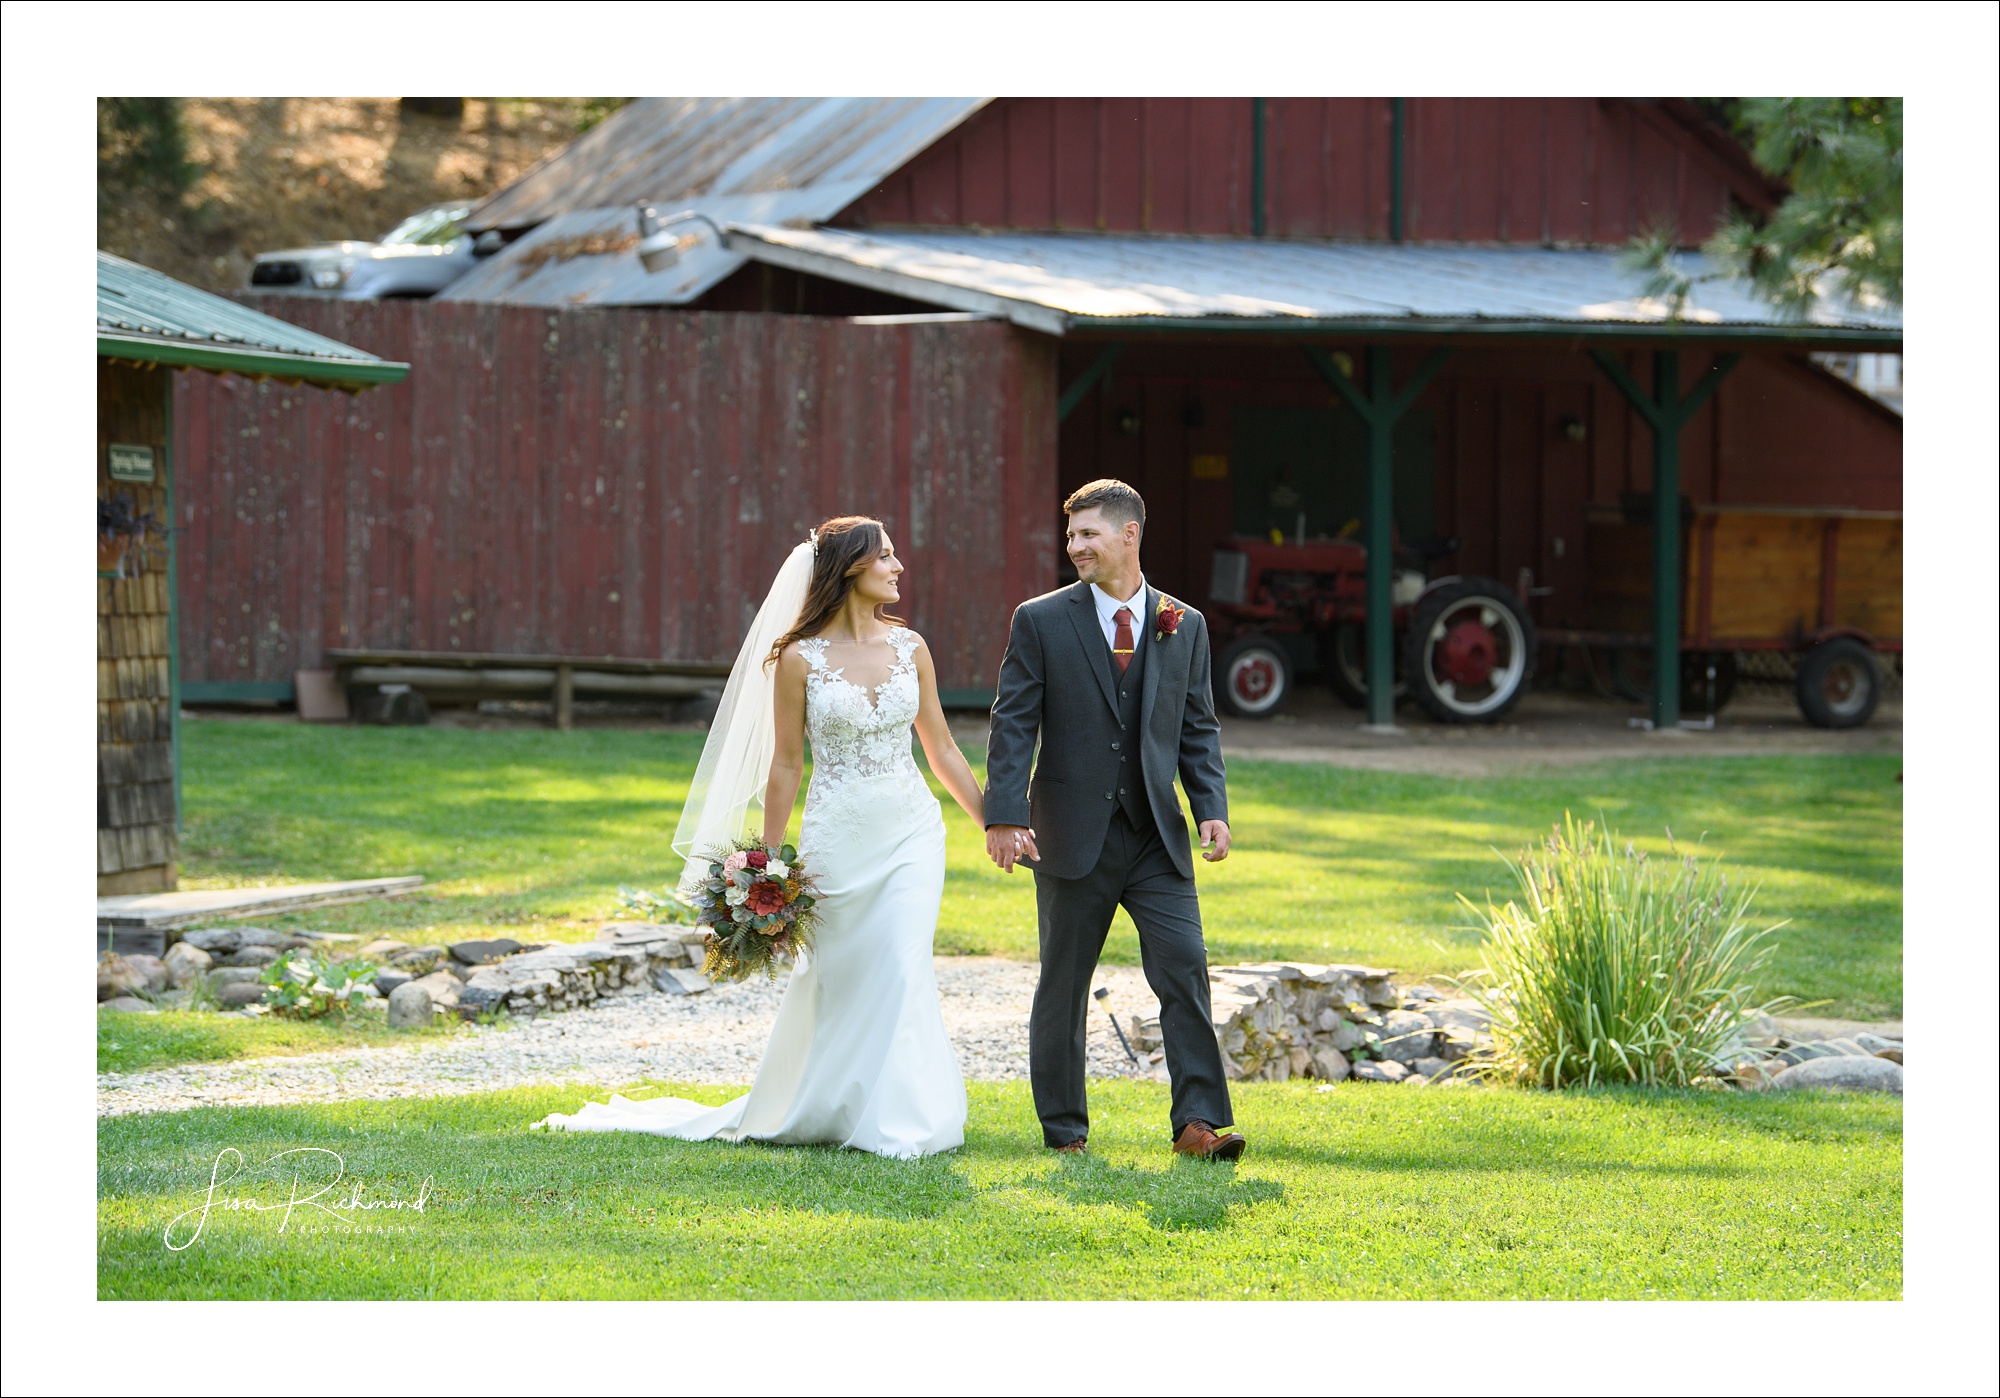 Ryan and Stephanie- Married at ShadowRidge Ranch